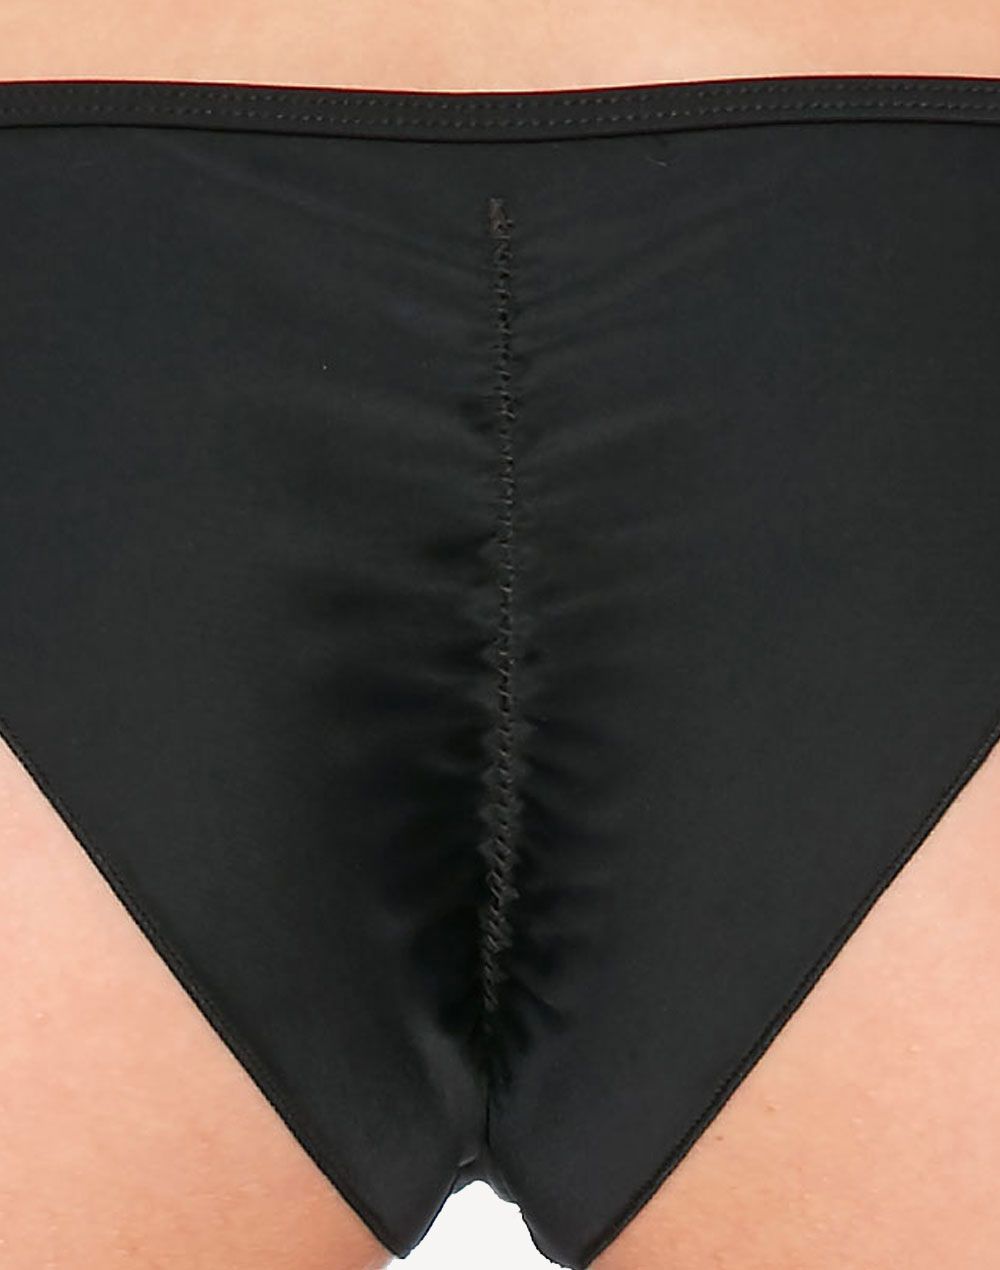 Body Glove Smoothies Brasilia Bikini Bottom#color_black